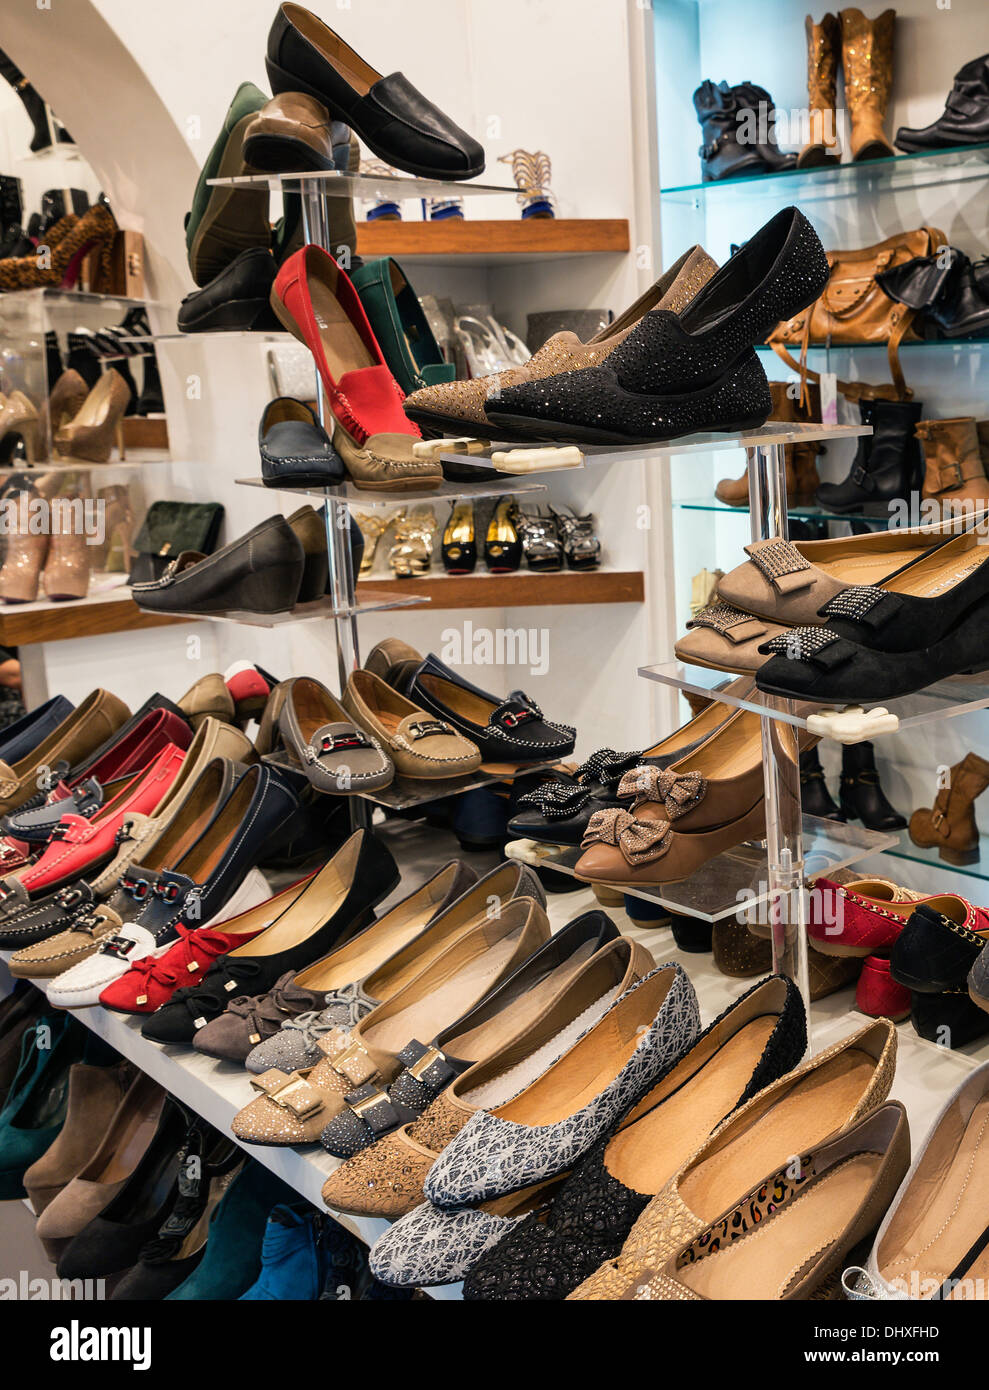 Shoe store display Stock Photo - Alamy